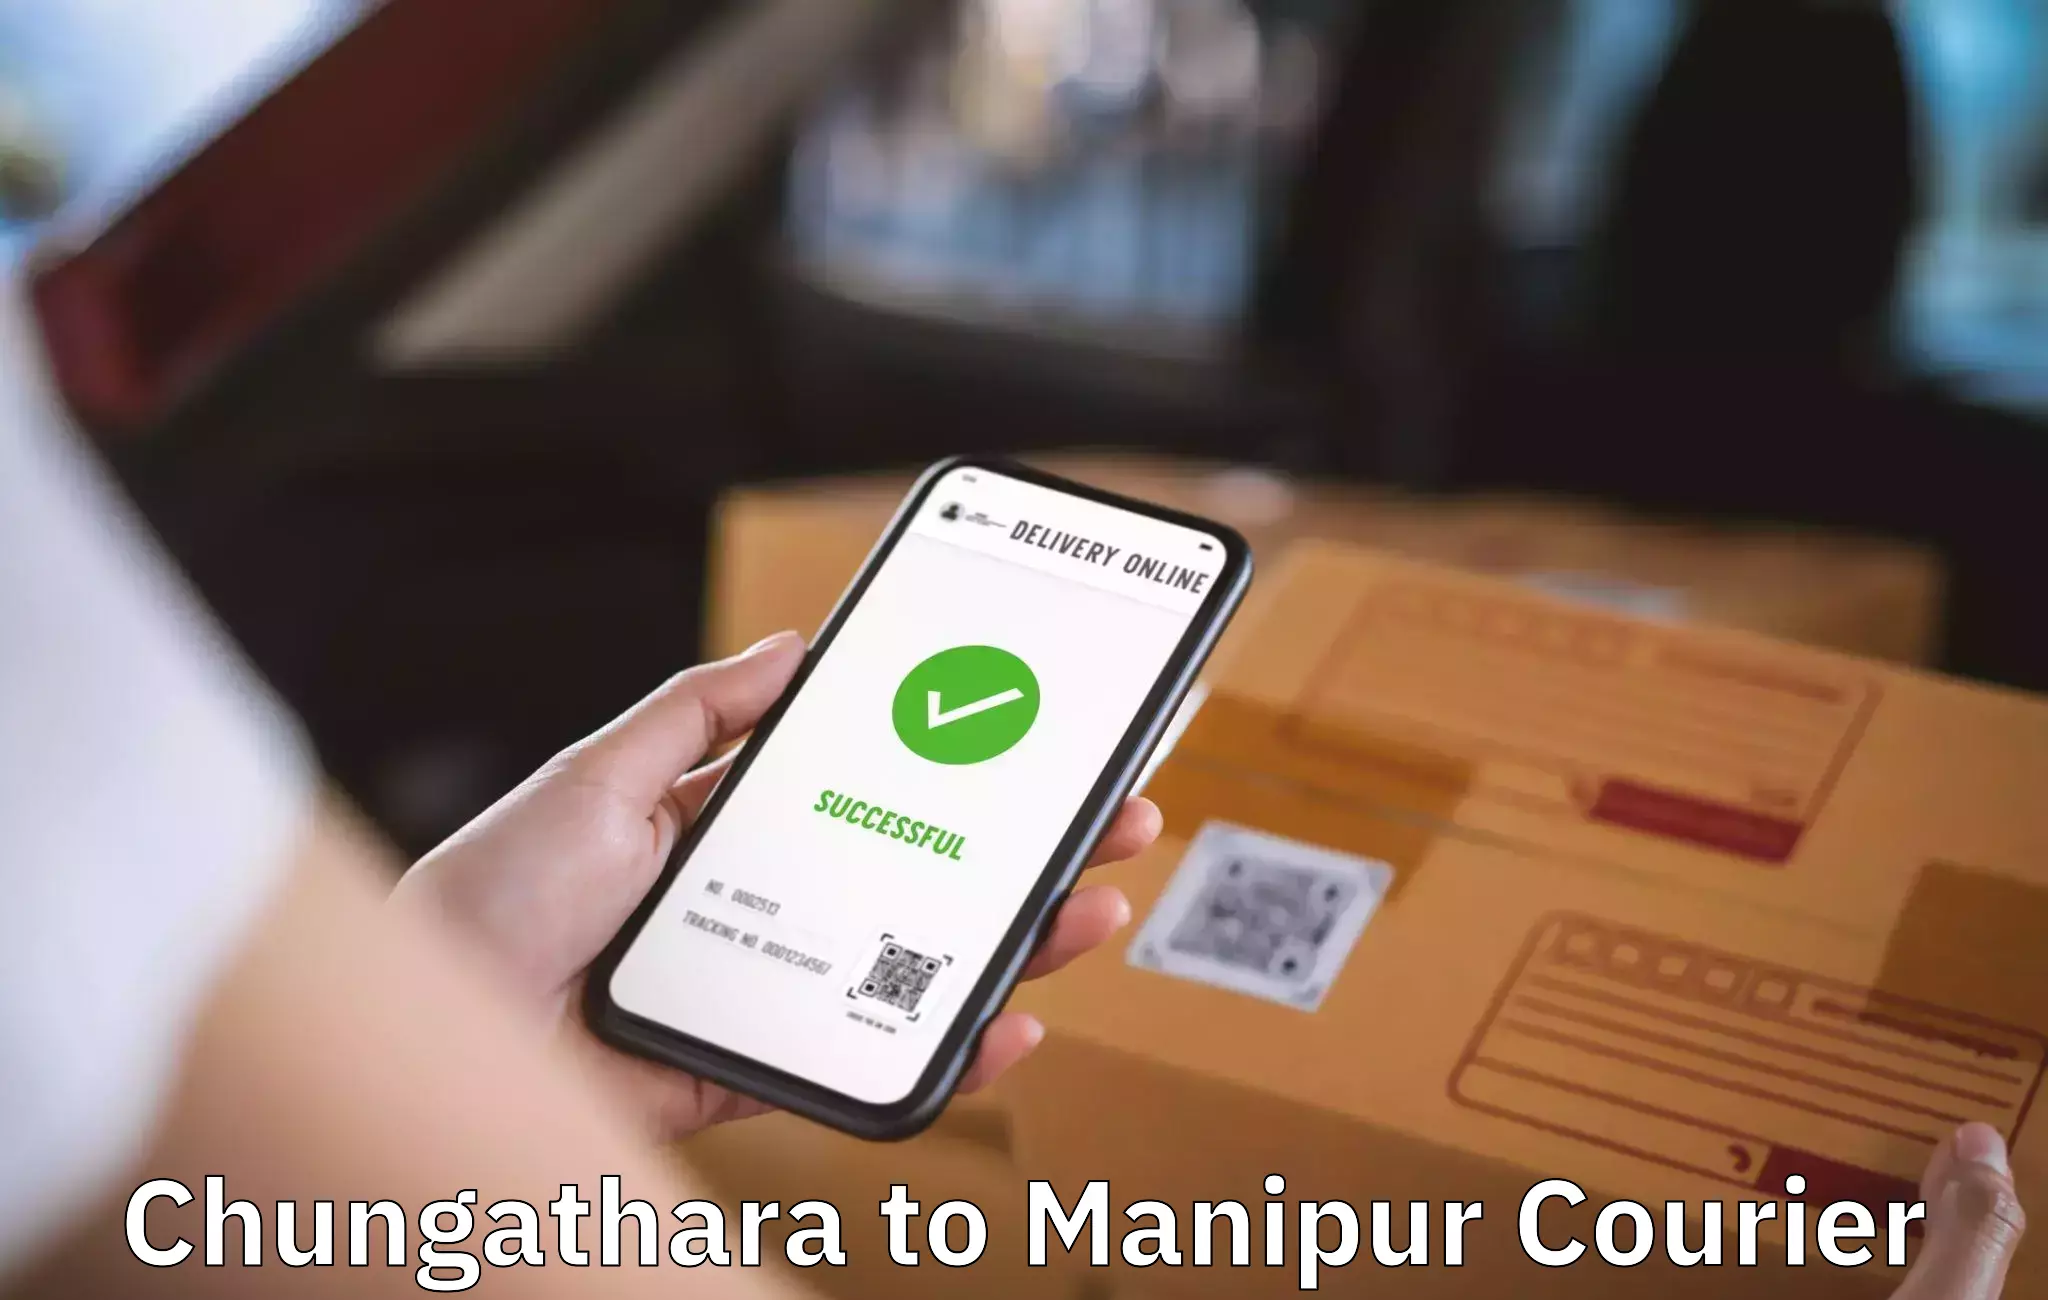 Professional moving company Chungathara to Manipur